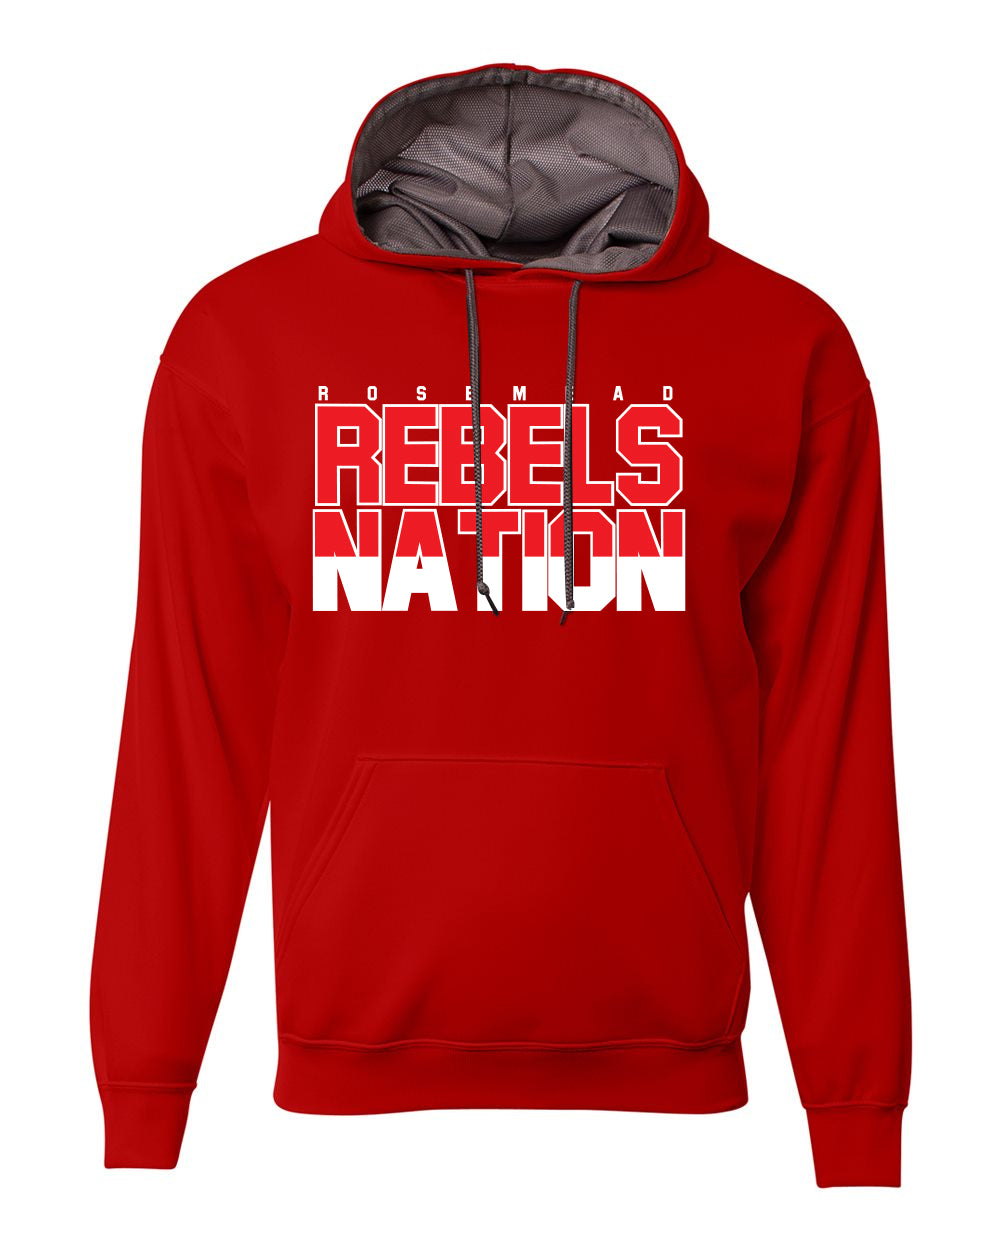 ROSEMEAD REBELS - REBELS NATION DRIHOOD - RED - PERFORMANCE FLEECE